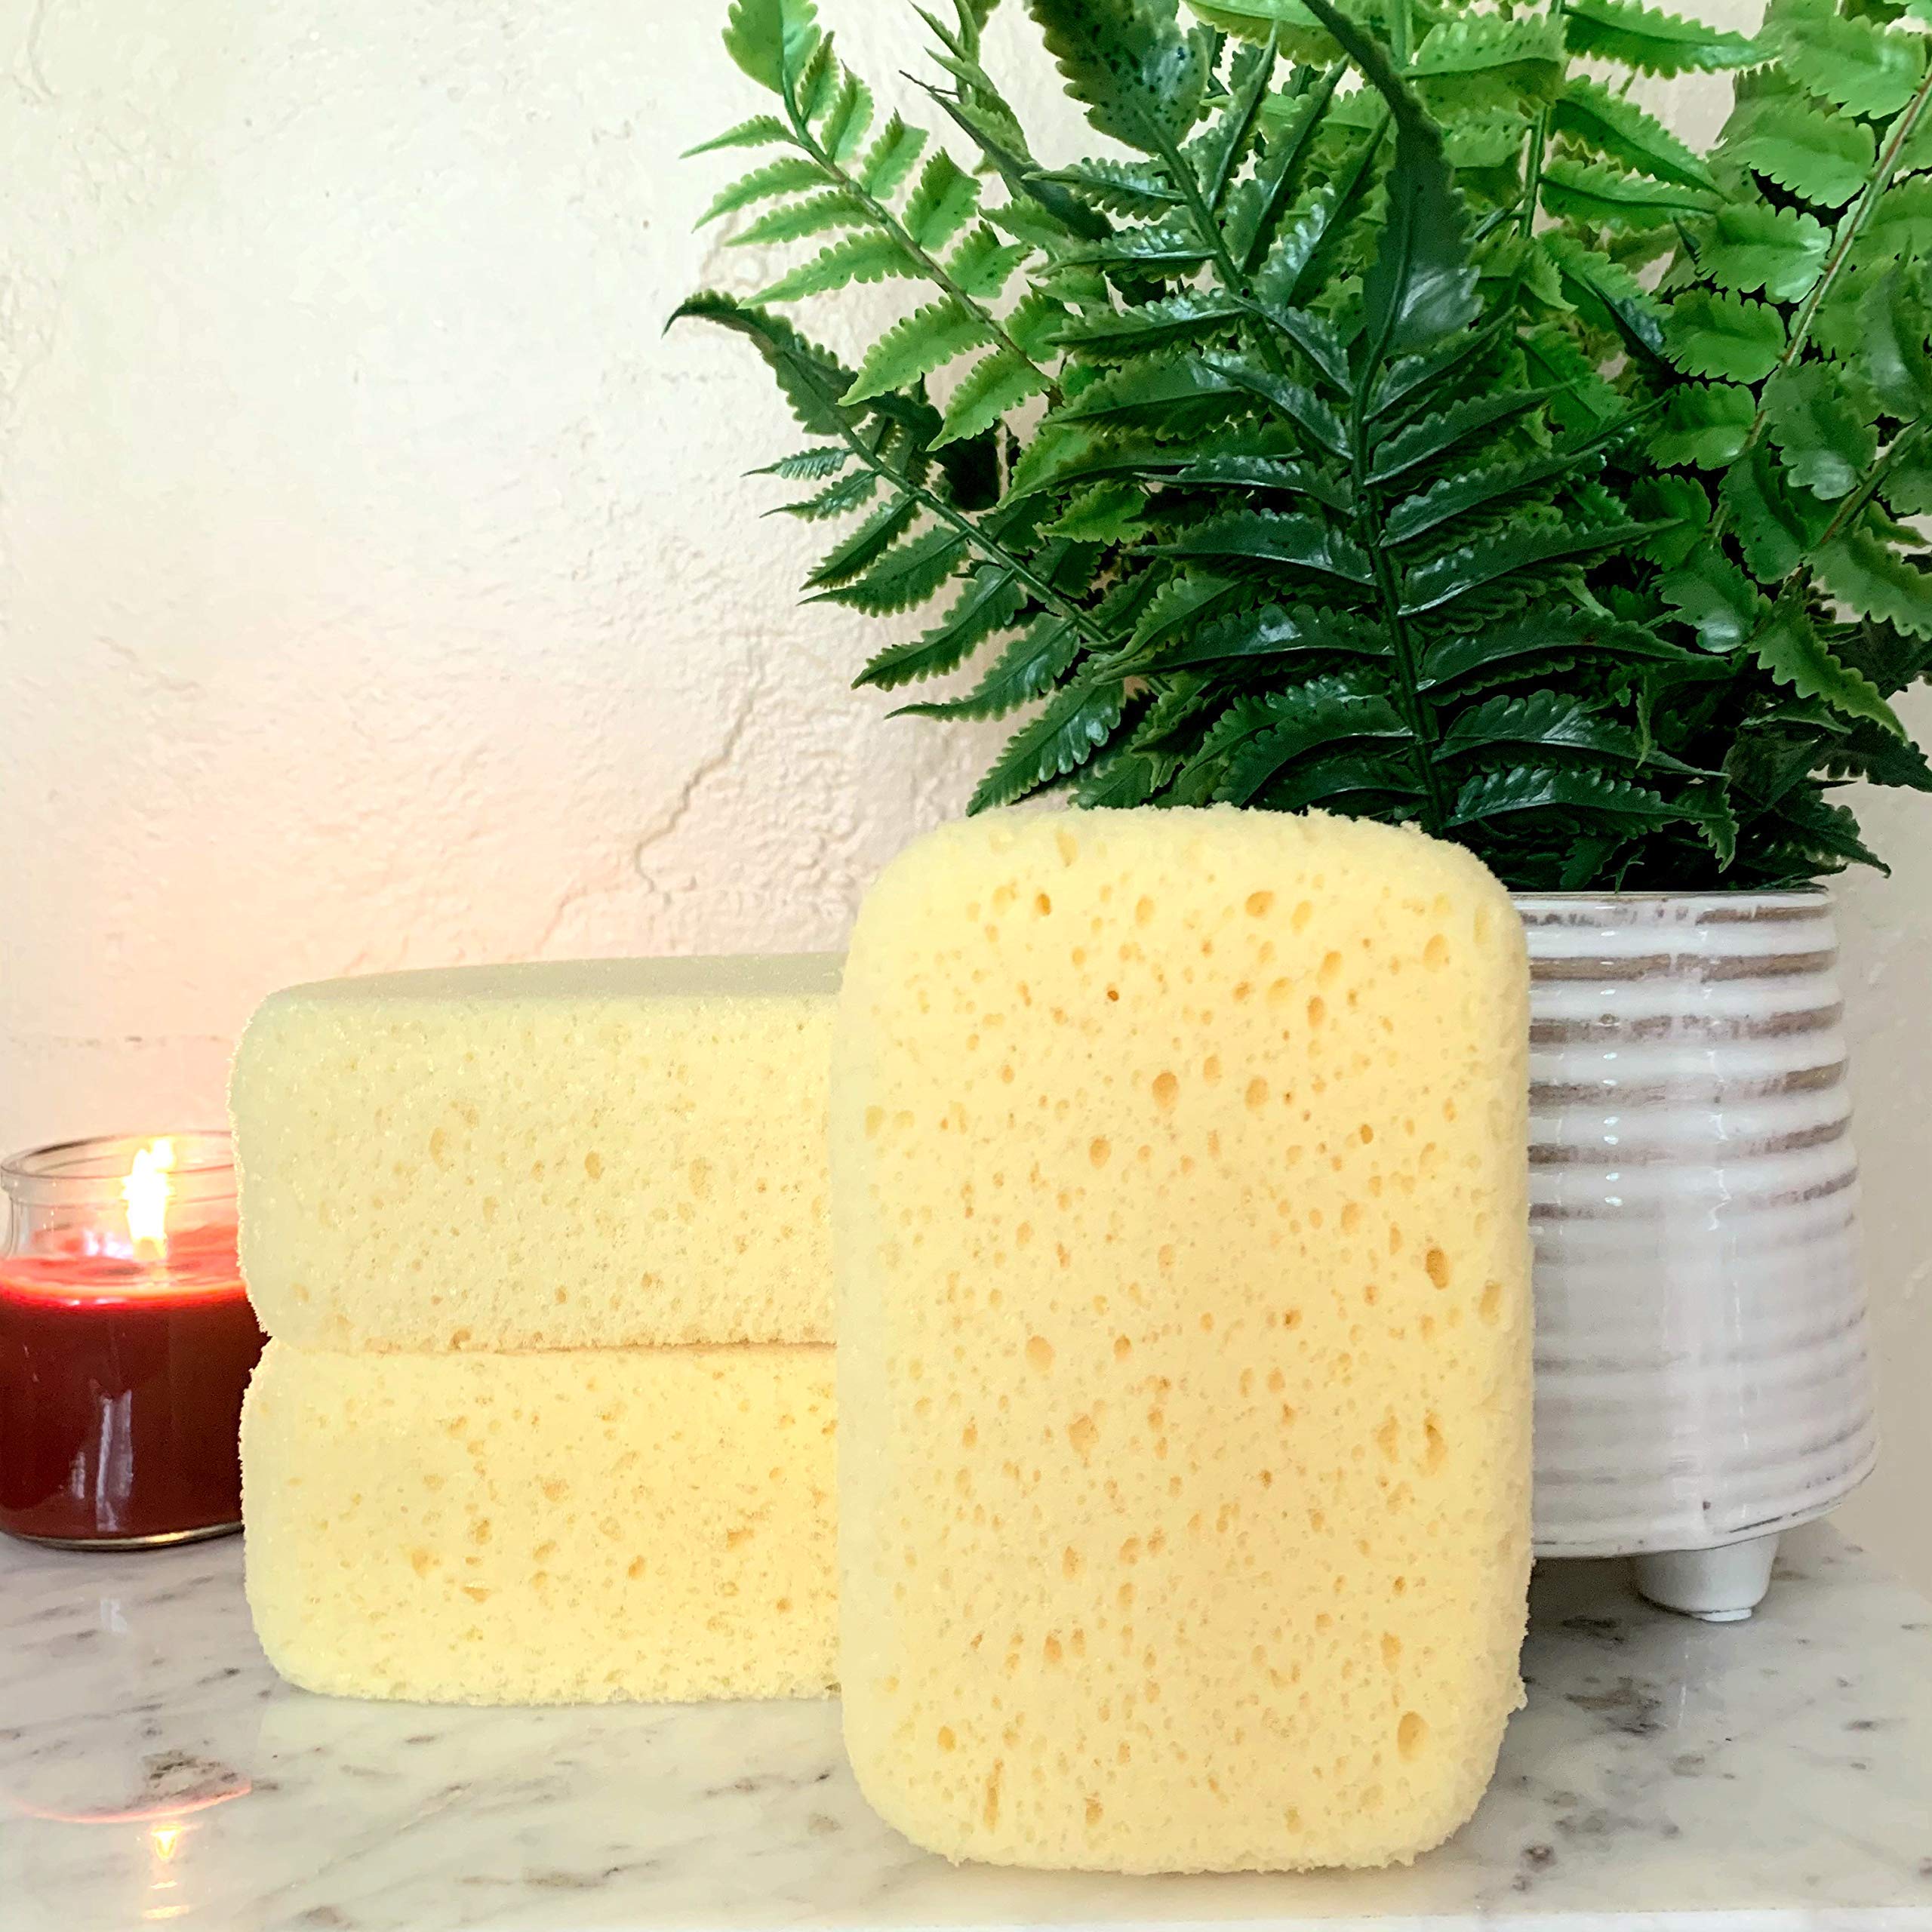 Michelle's Melting Pot Foam Bath Sponge Shower Sponge 3 Count (Smooth Yellow)